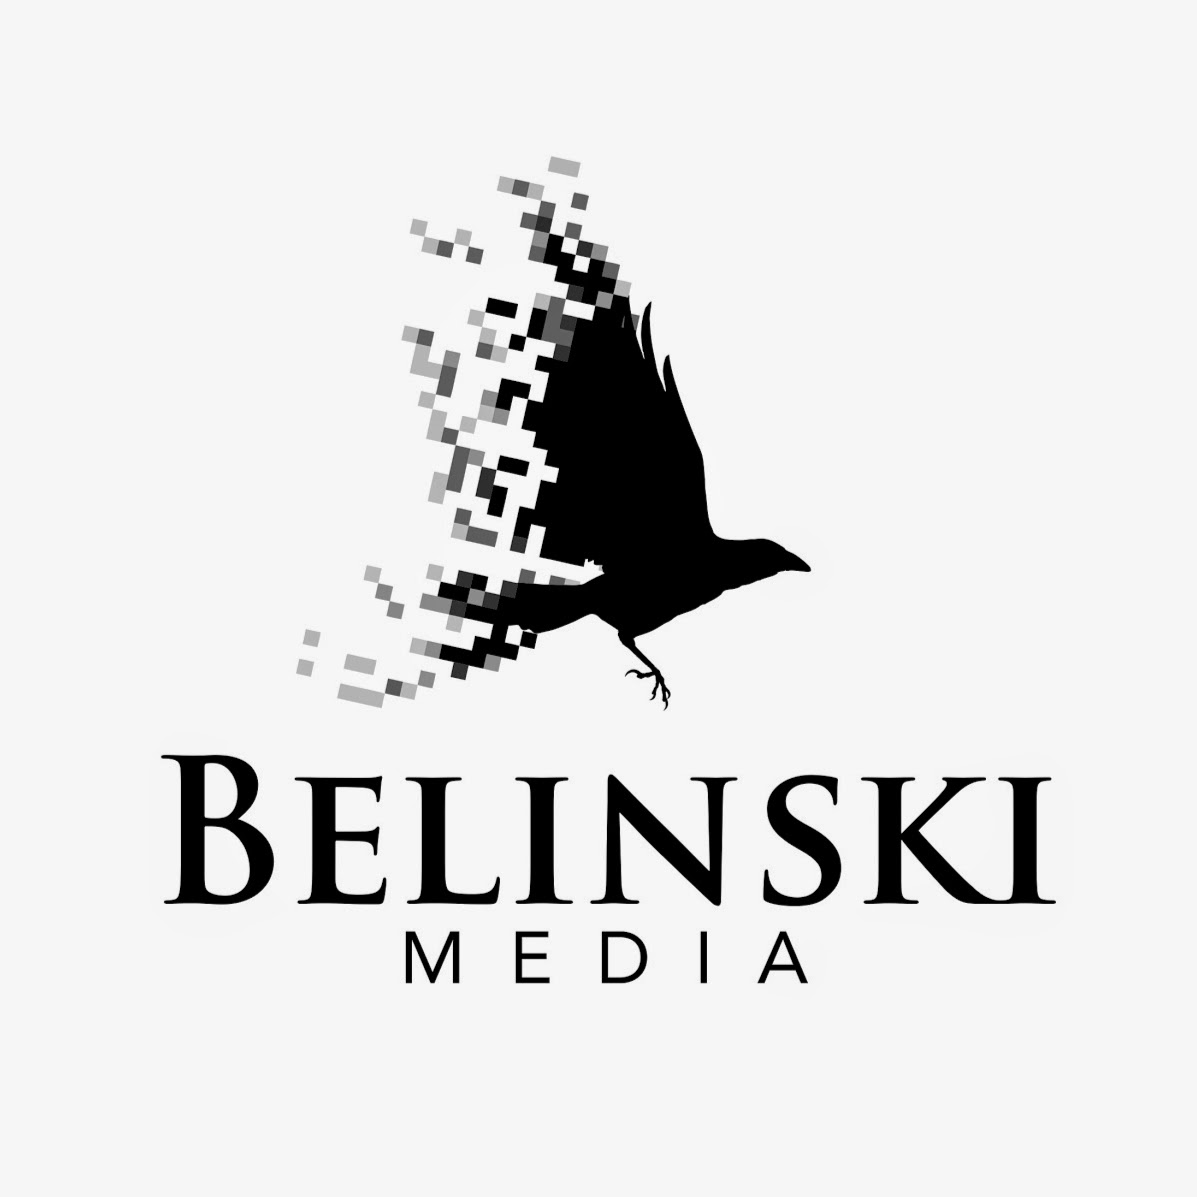 Photo of Belinski Media LLC in Kings County City, New York, United States - 1 Picture of Point of interest, Establishment